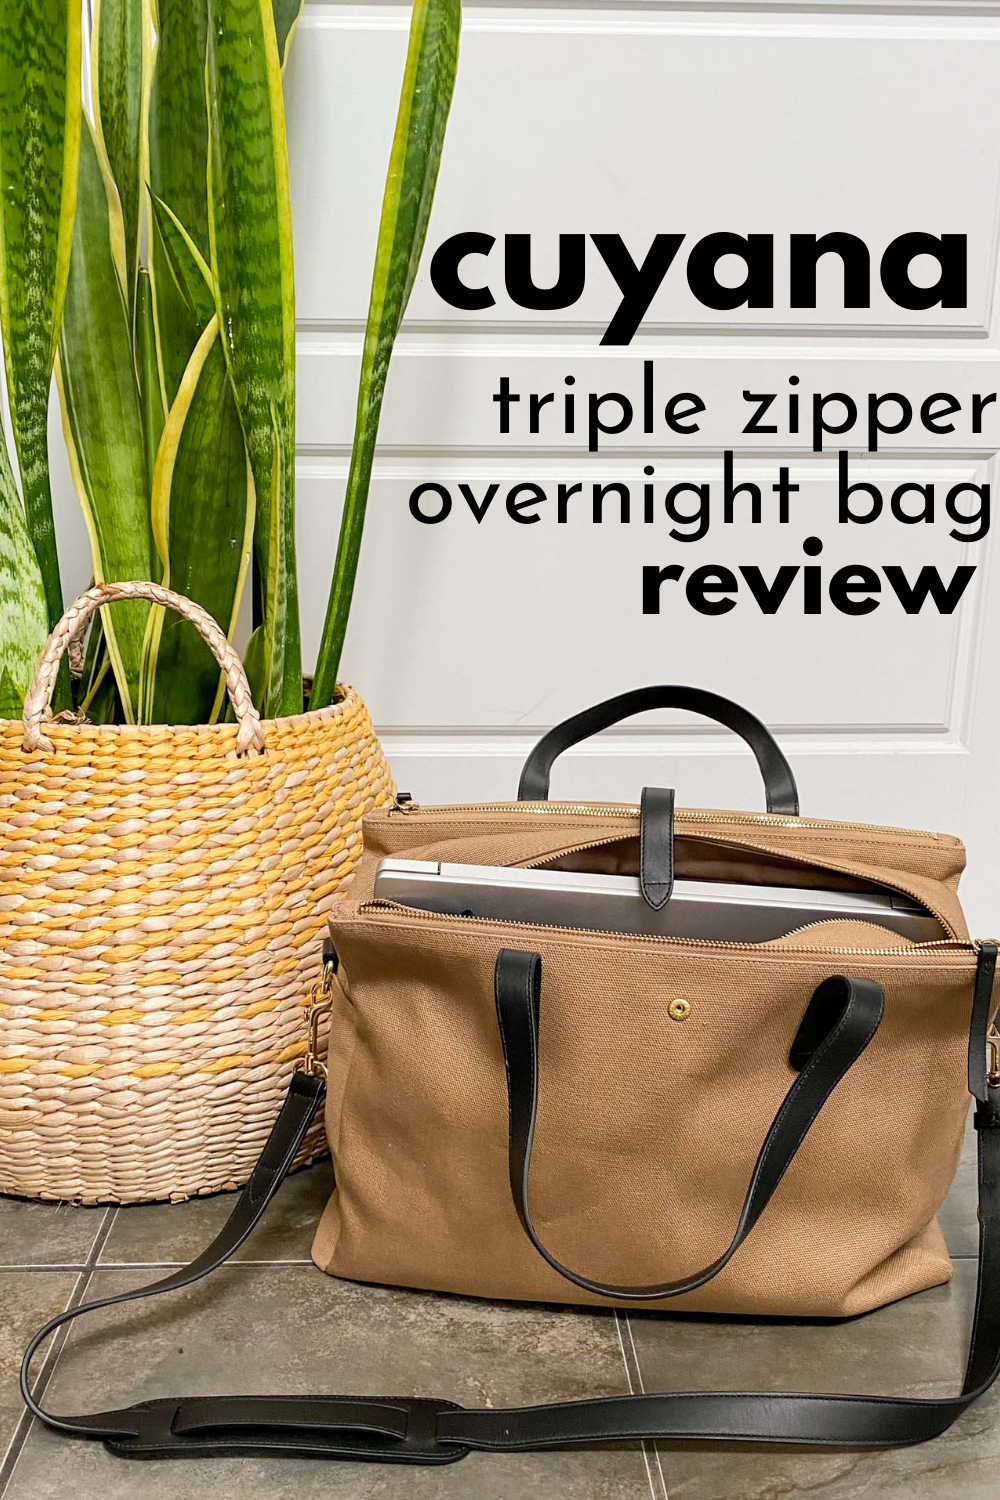 cuyana triple zipper overnight bag